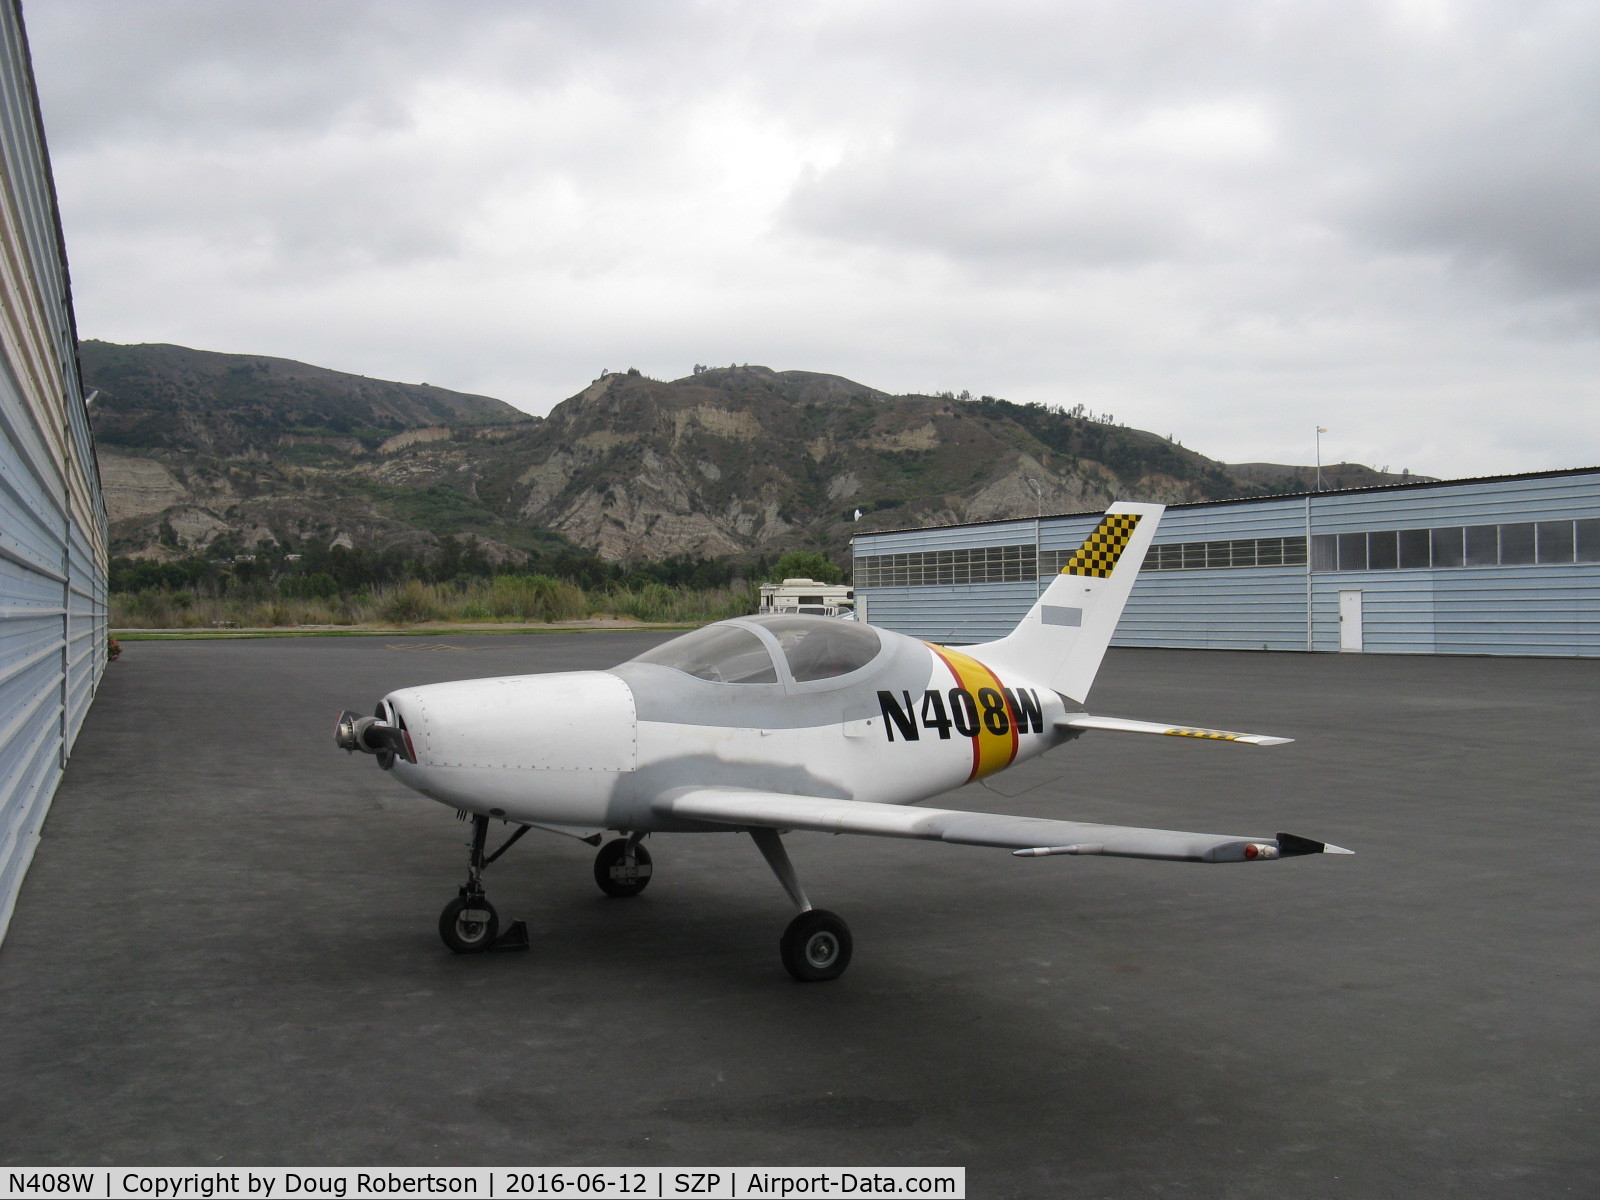 N408W, Questair Venture C/N 001, Fish SKIPSPECIAL Questair VENTURE, Experimental class, on AVIATION F-X work hangar ramp